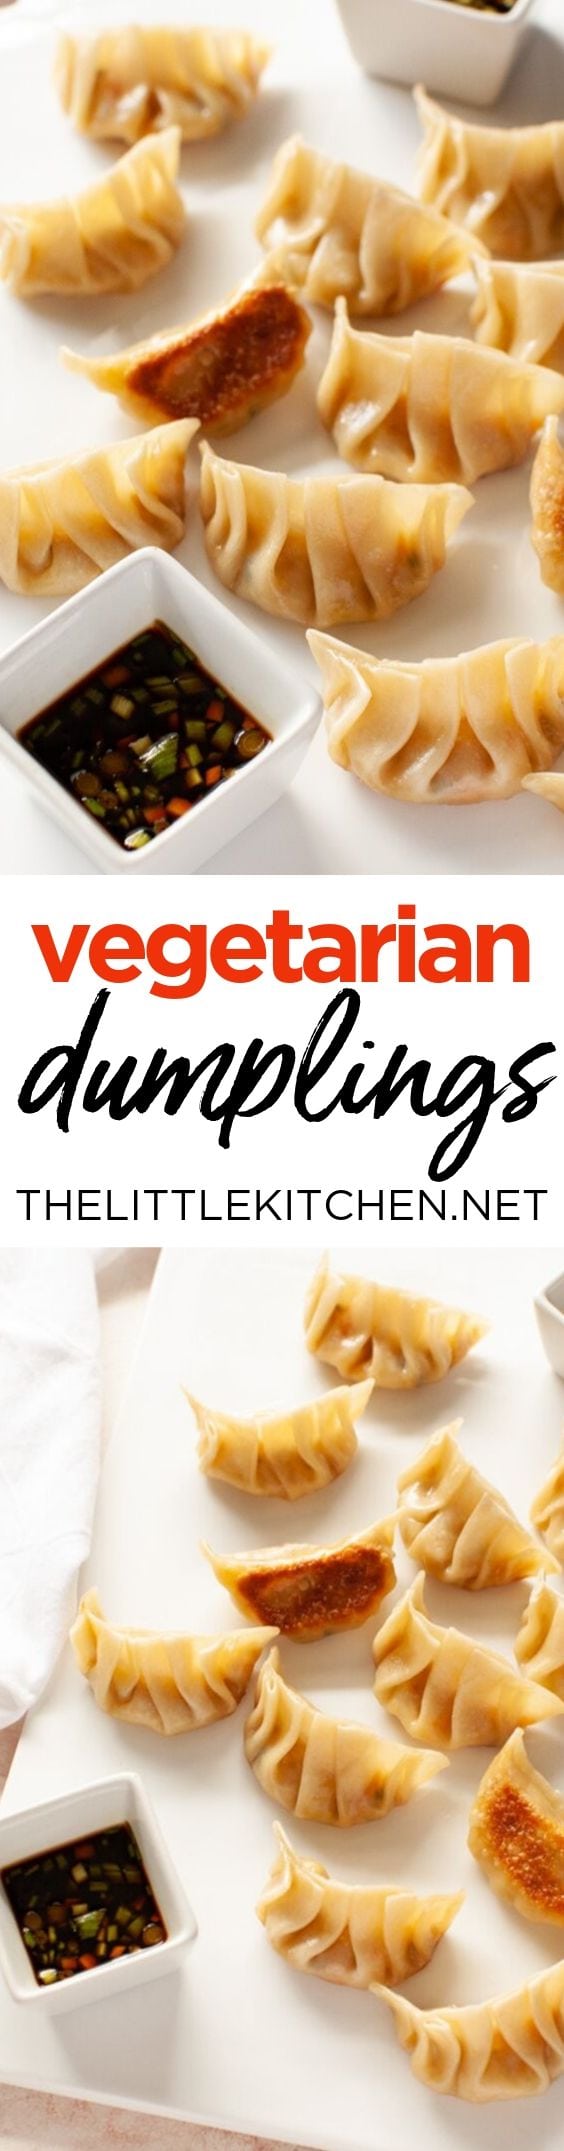 Vegetarian Dumplings from thelittlekitchen.net